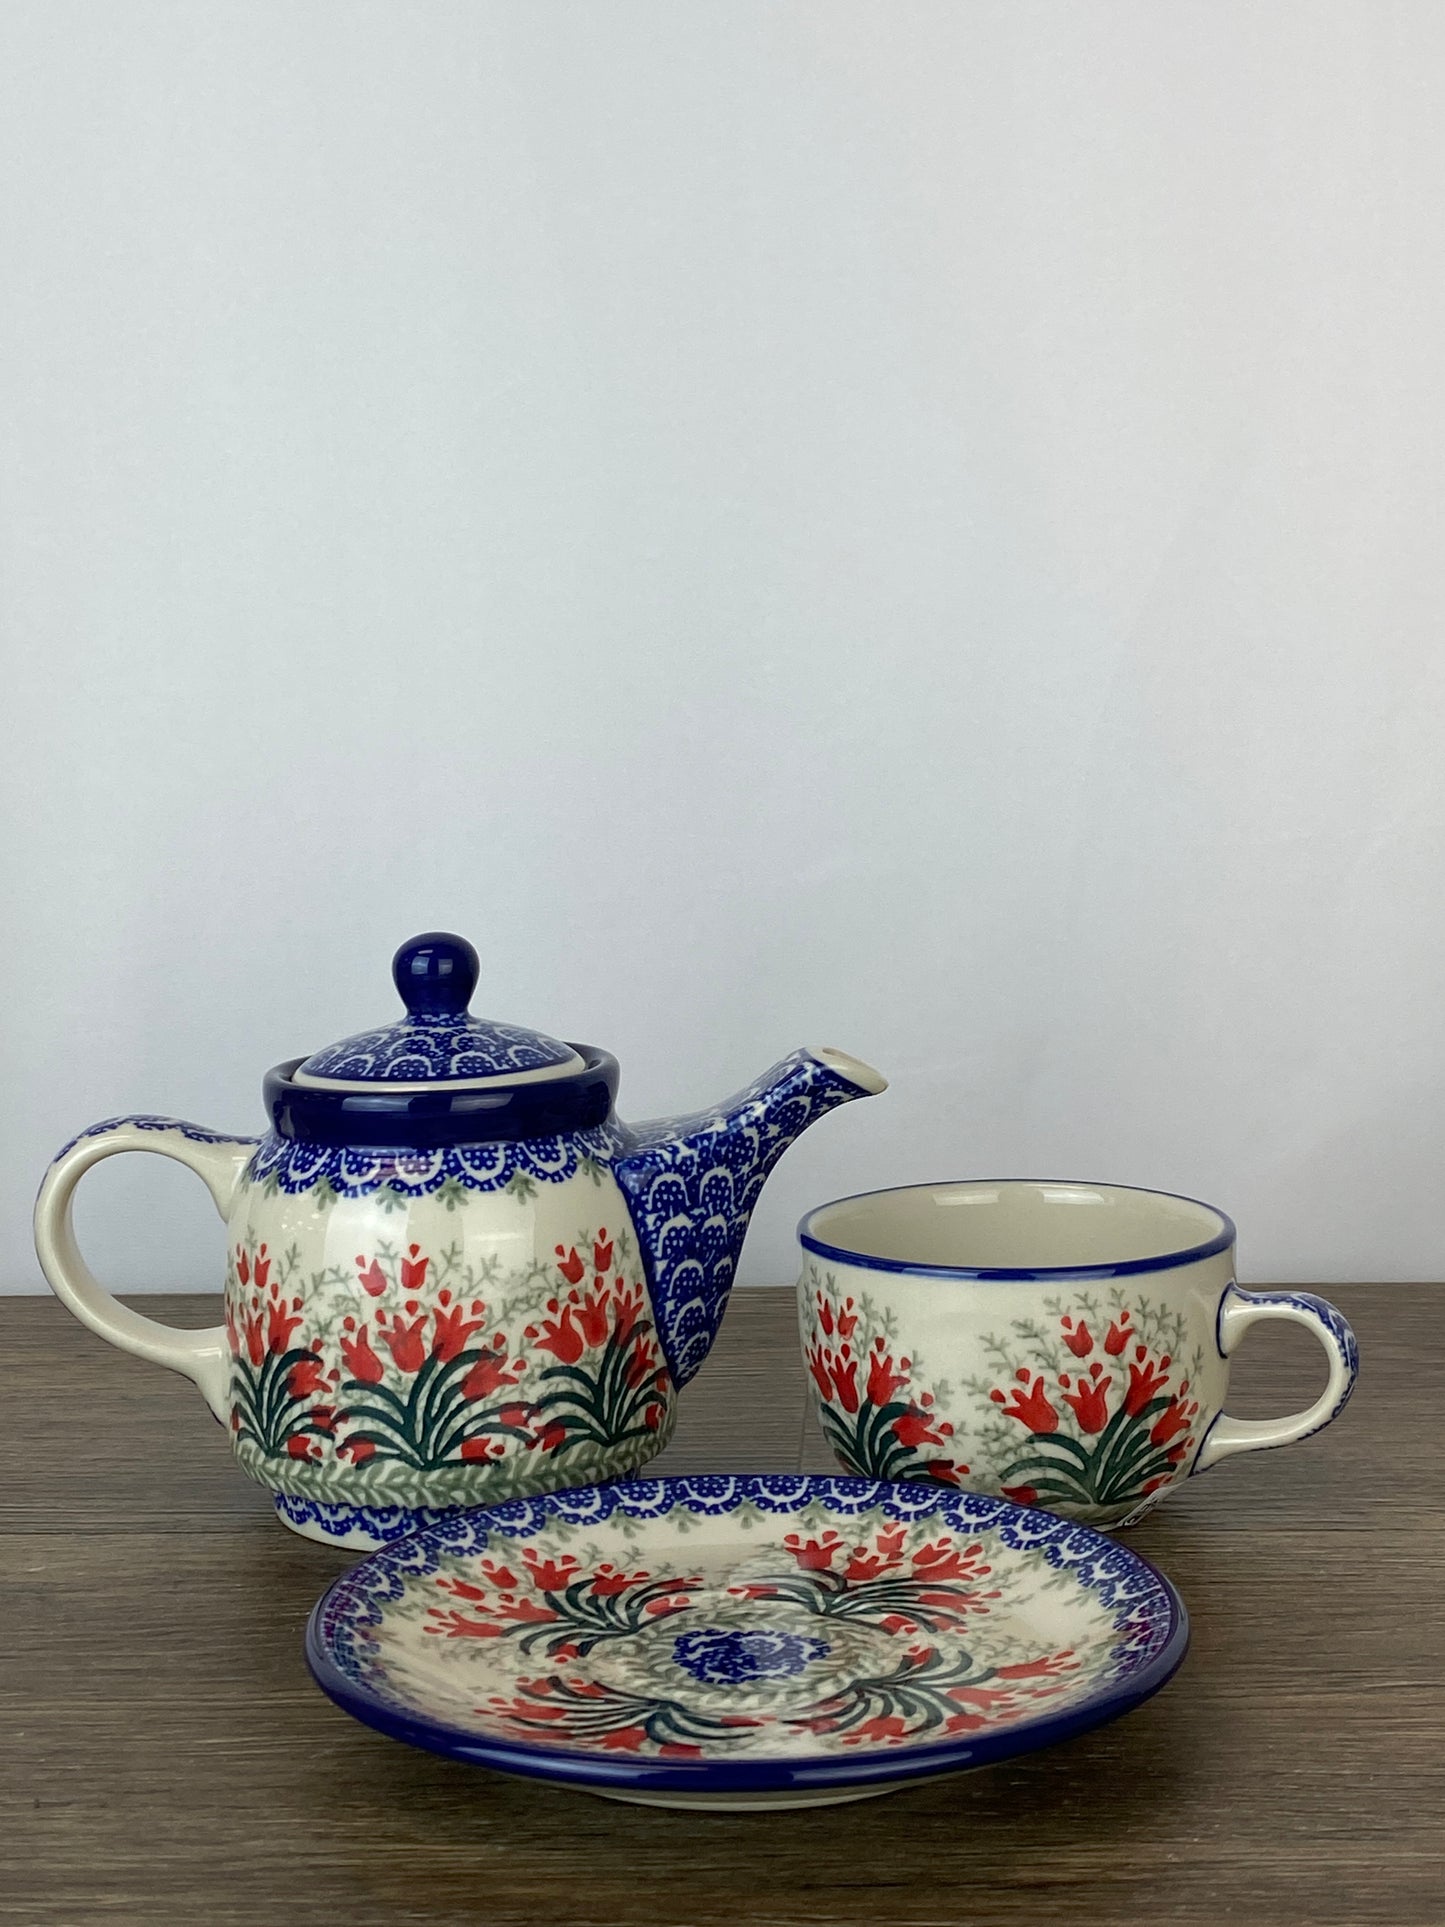 Tea For One - Shape 423 - Pattern 1437